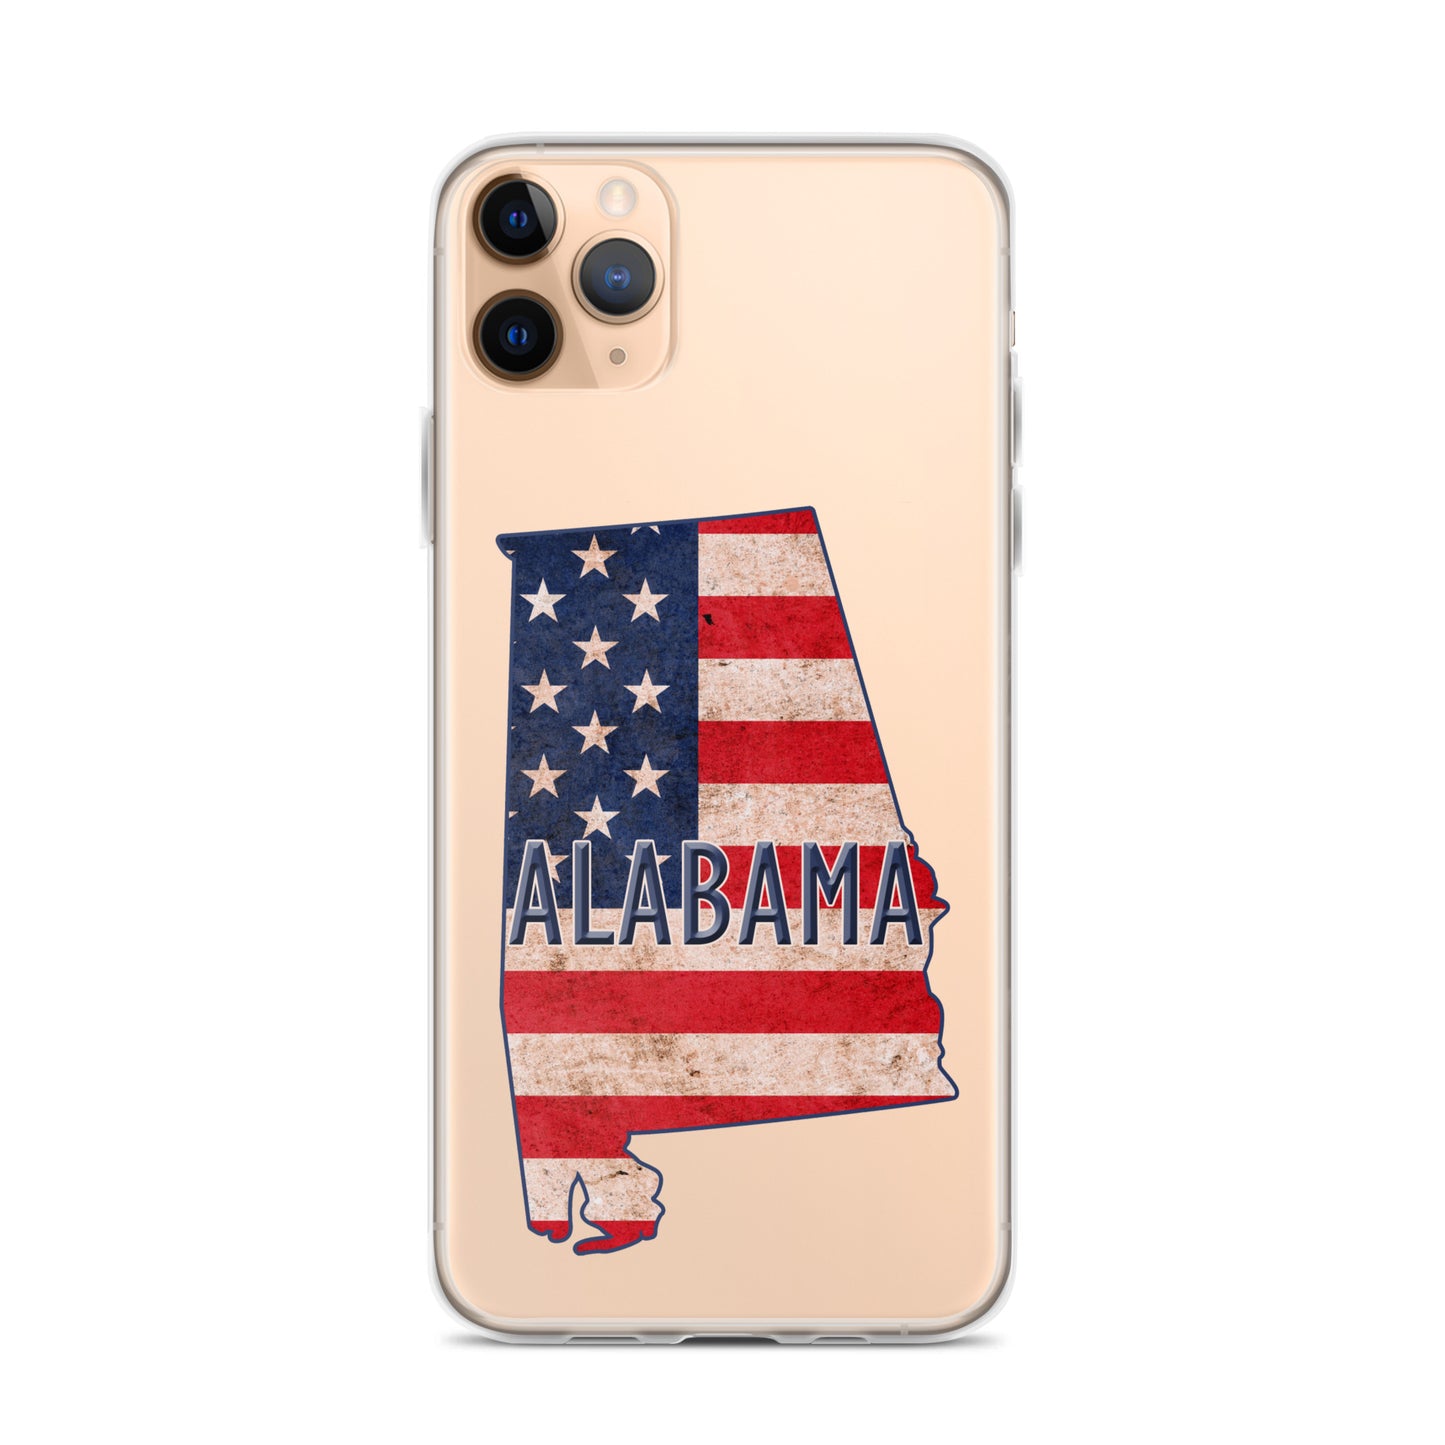 Alabama iPhone Case